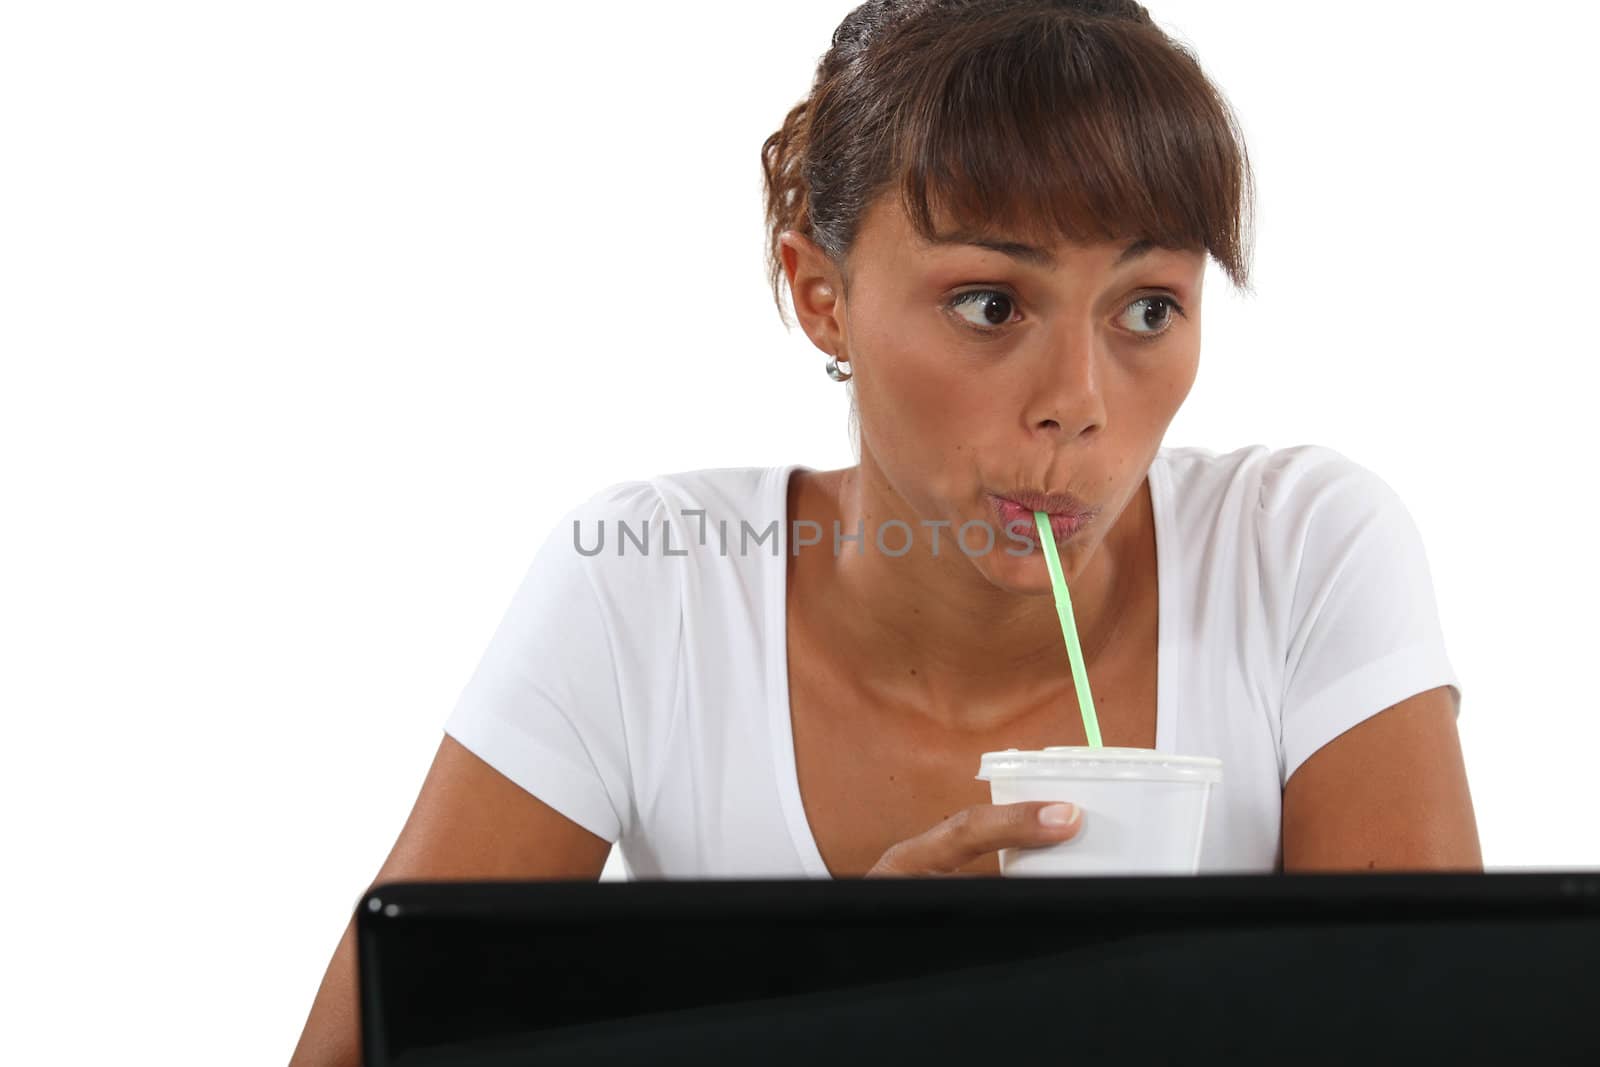 Woman drinking through straw at desk